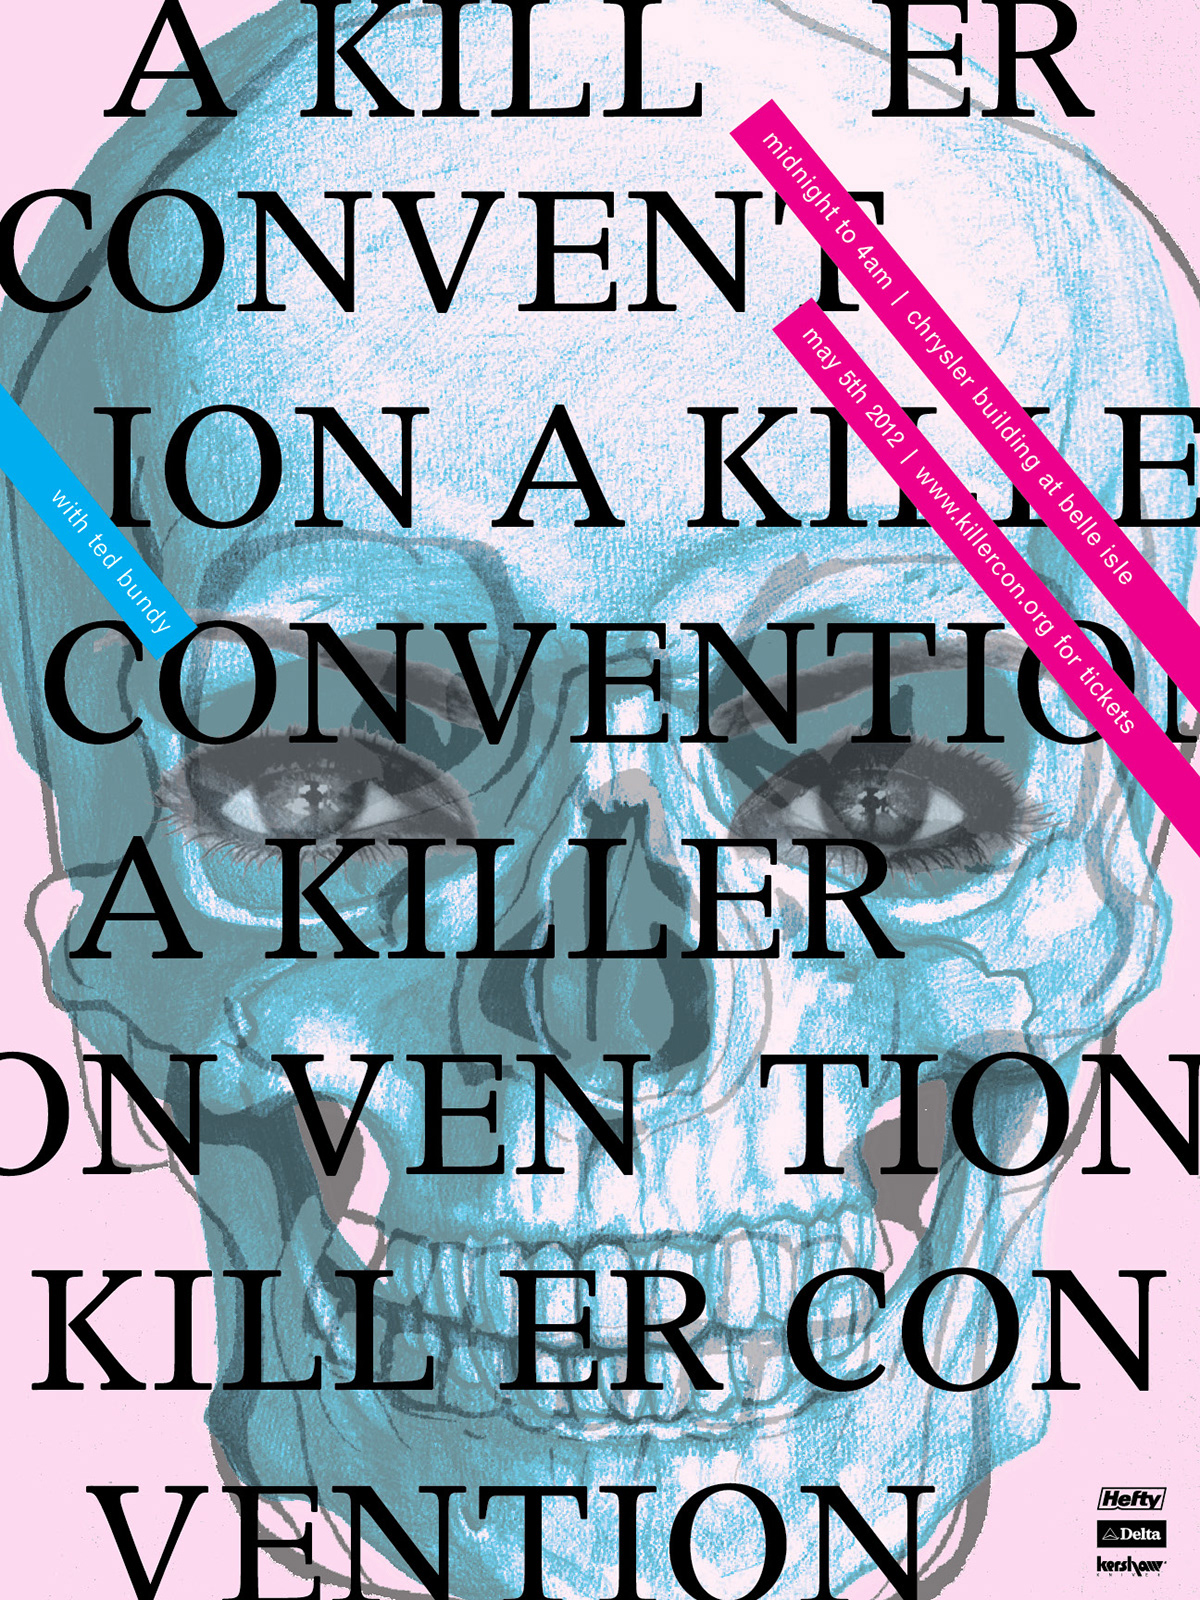 Poster Design convention serial killer Ted Bundy